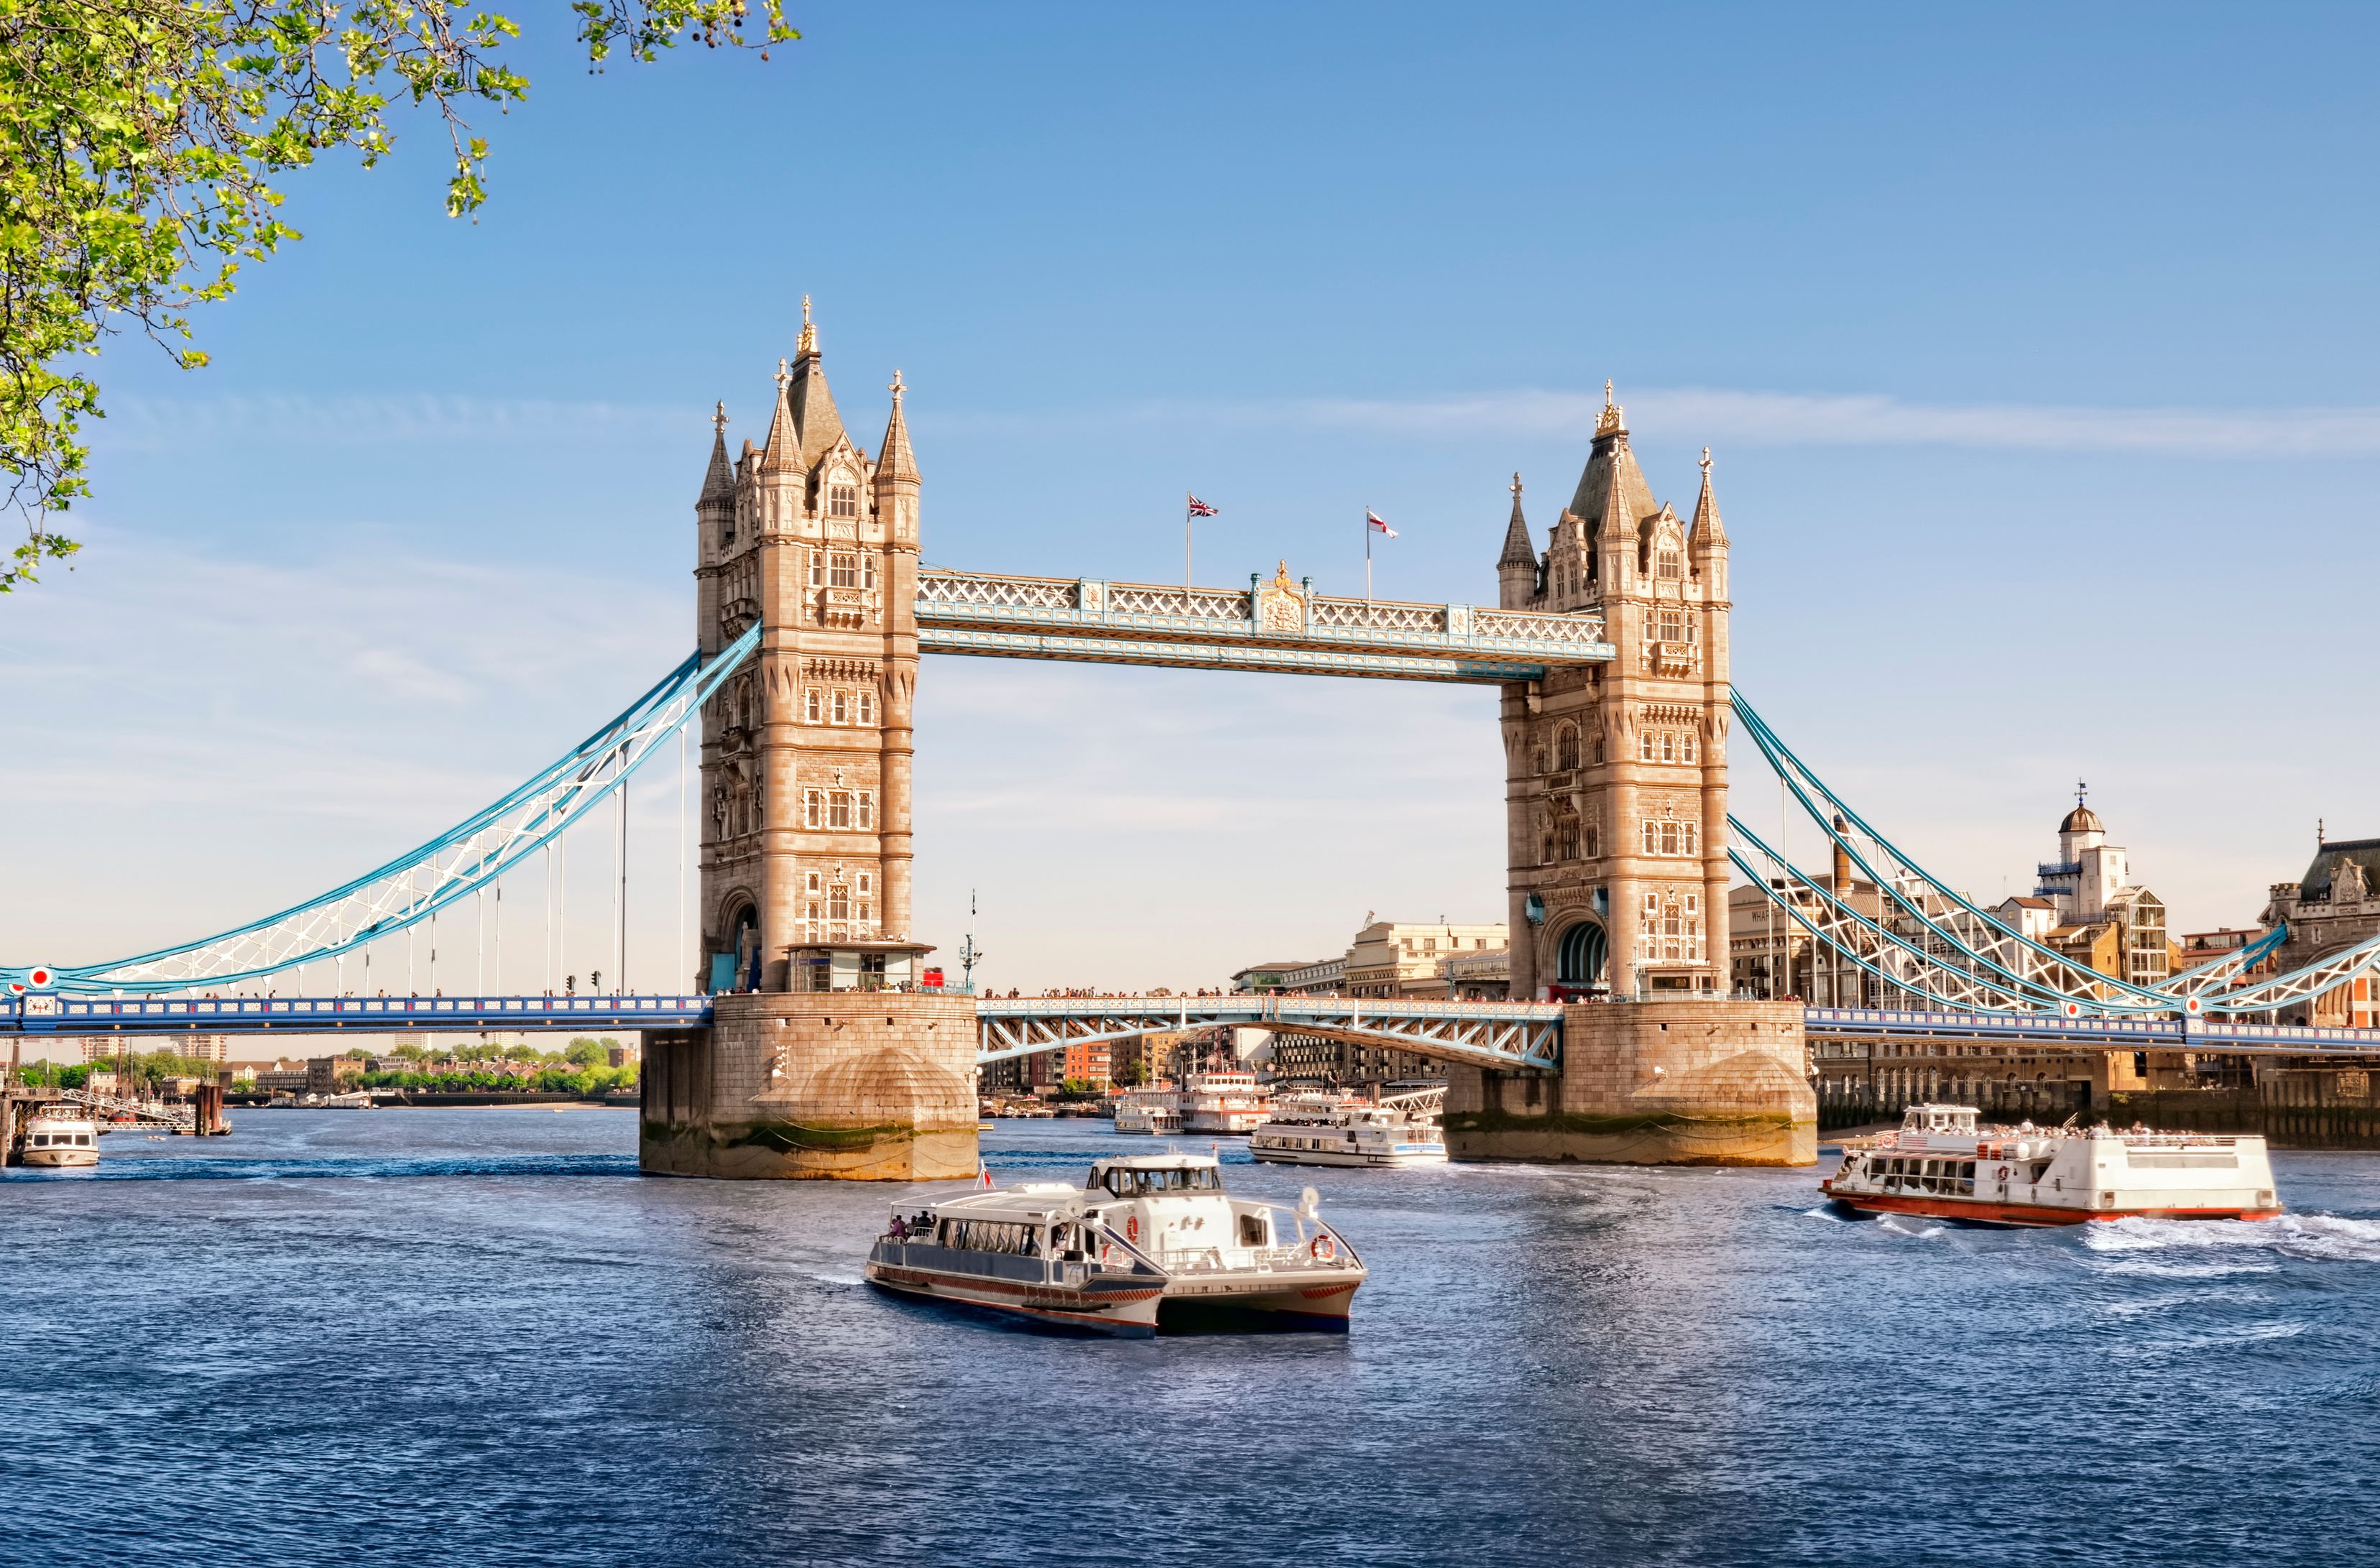 London - Tower Bridge - sunny